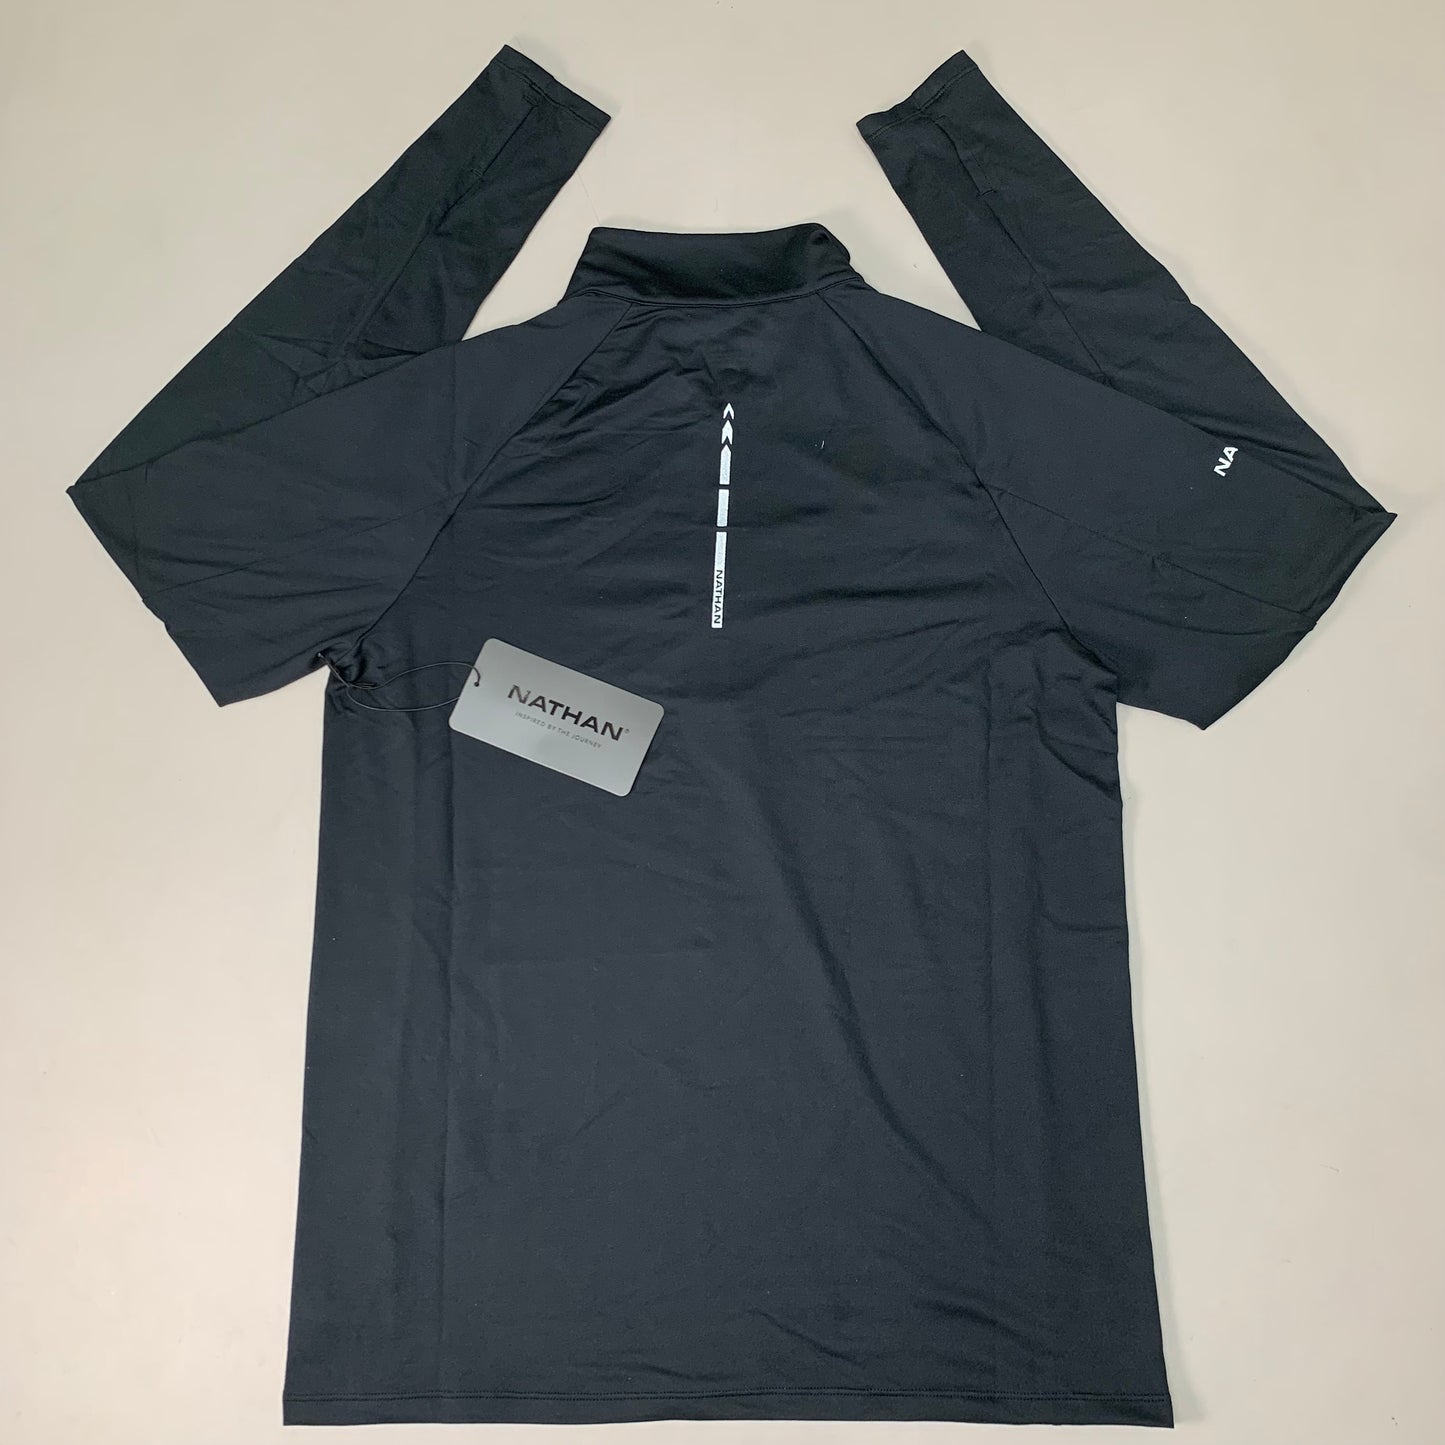 NATHAN Tempo 1/4 Zip Long Sleeve Shirt 2.0 Men's Small Black NS50960-00001-S (New)